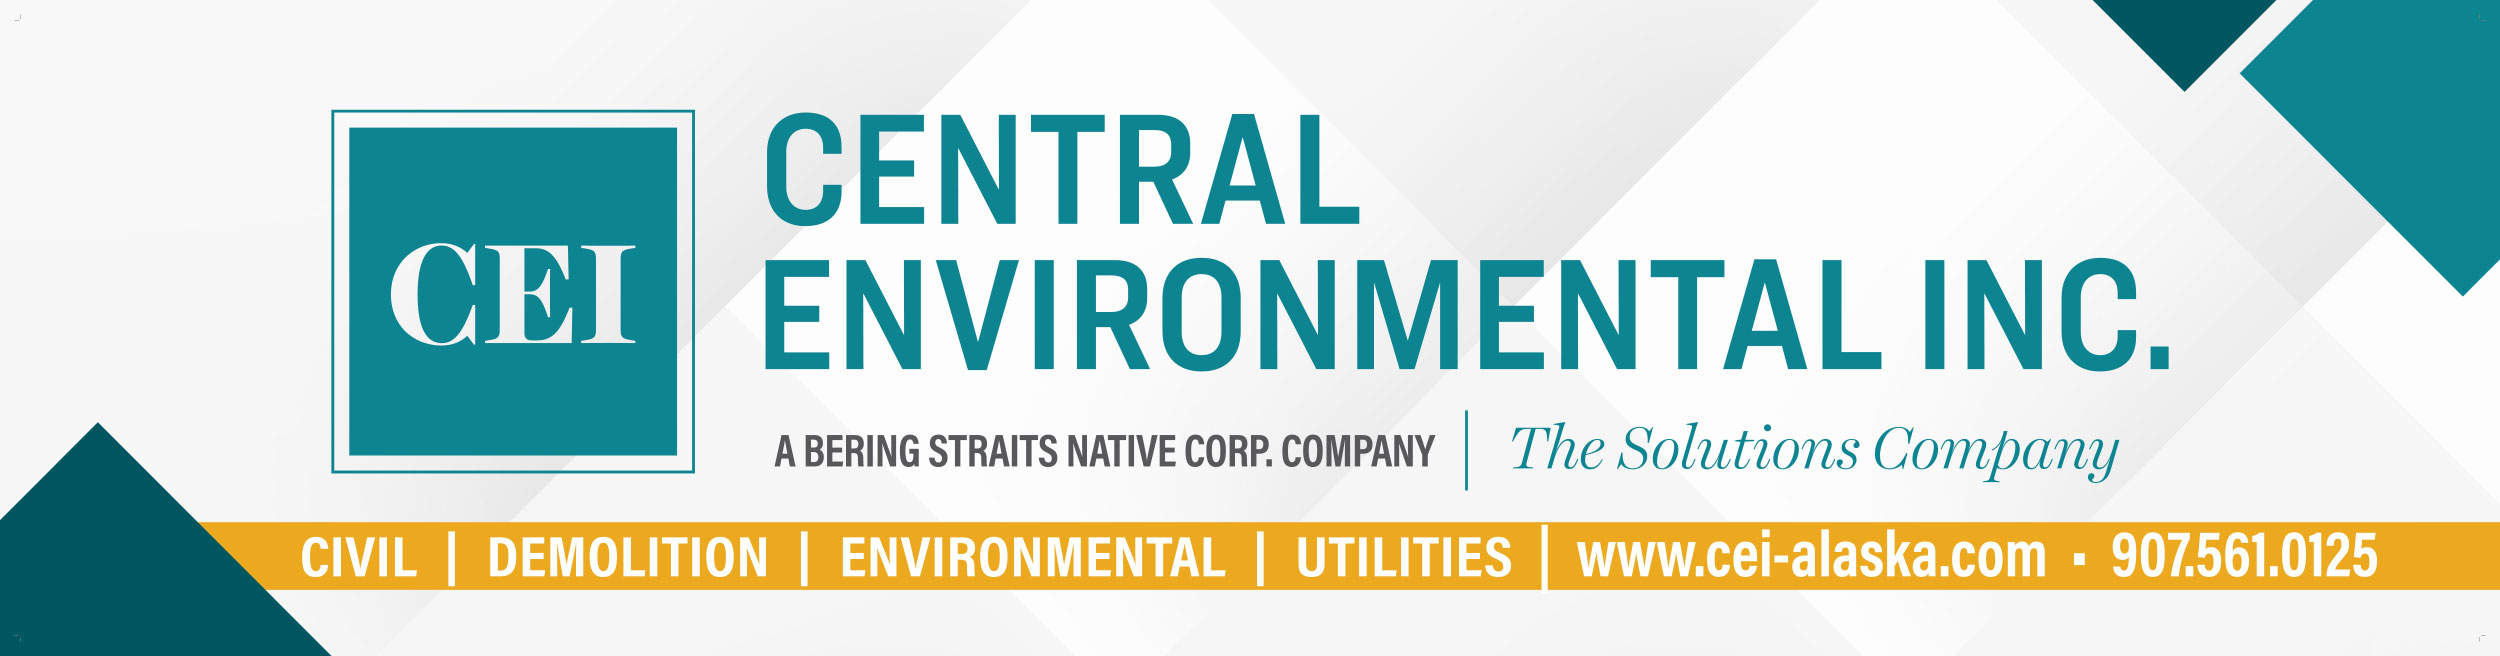 Central Environmental Inc.